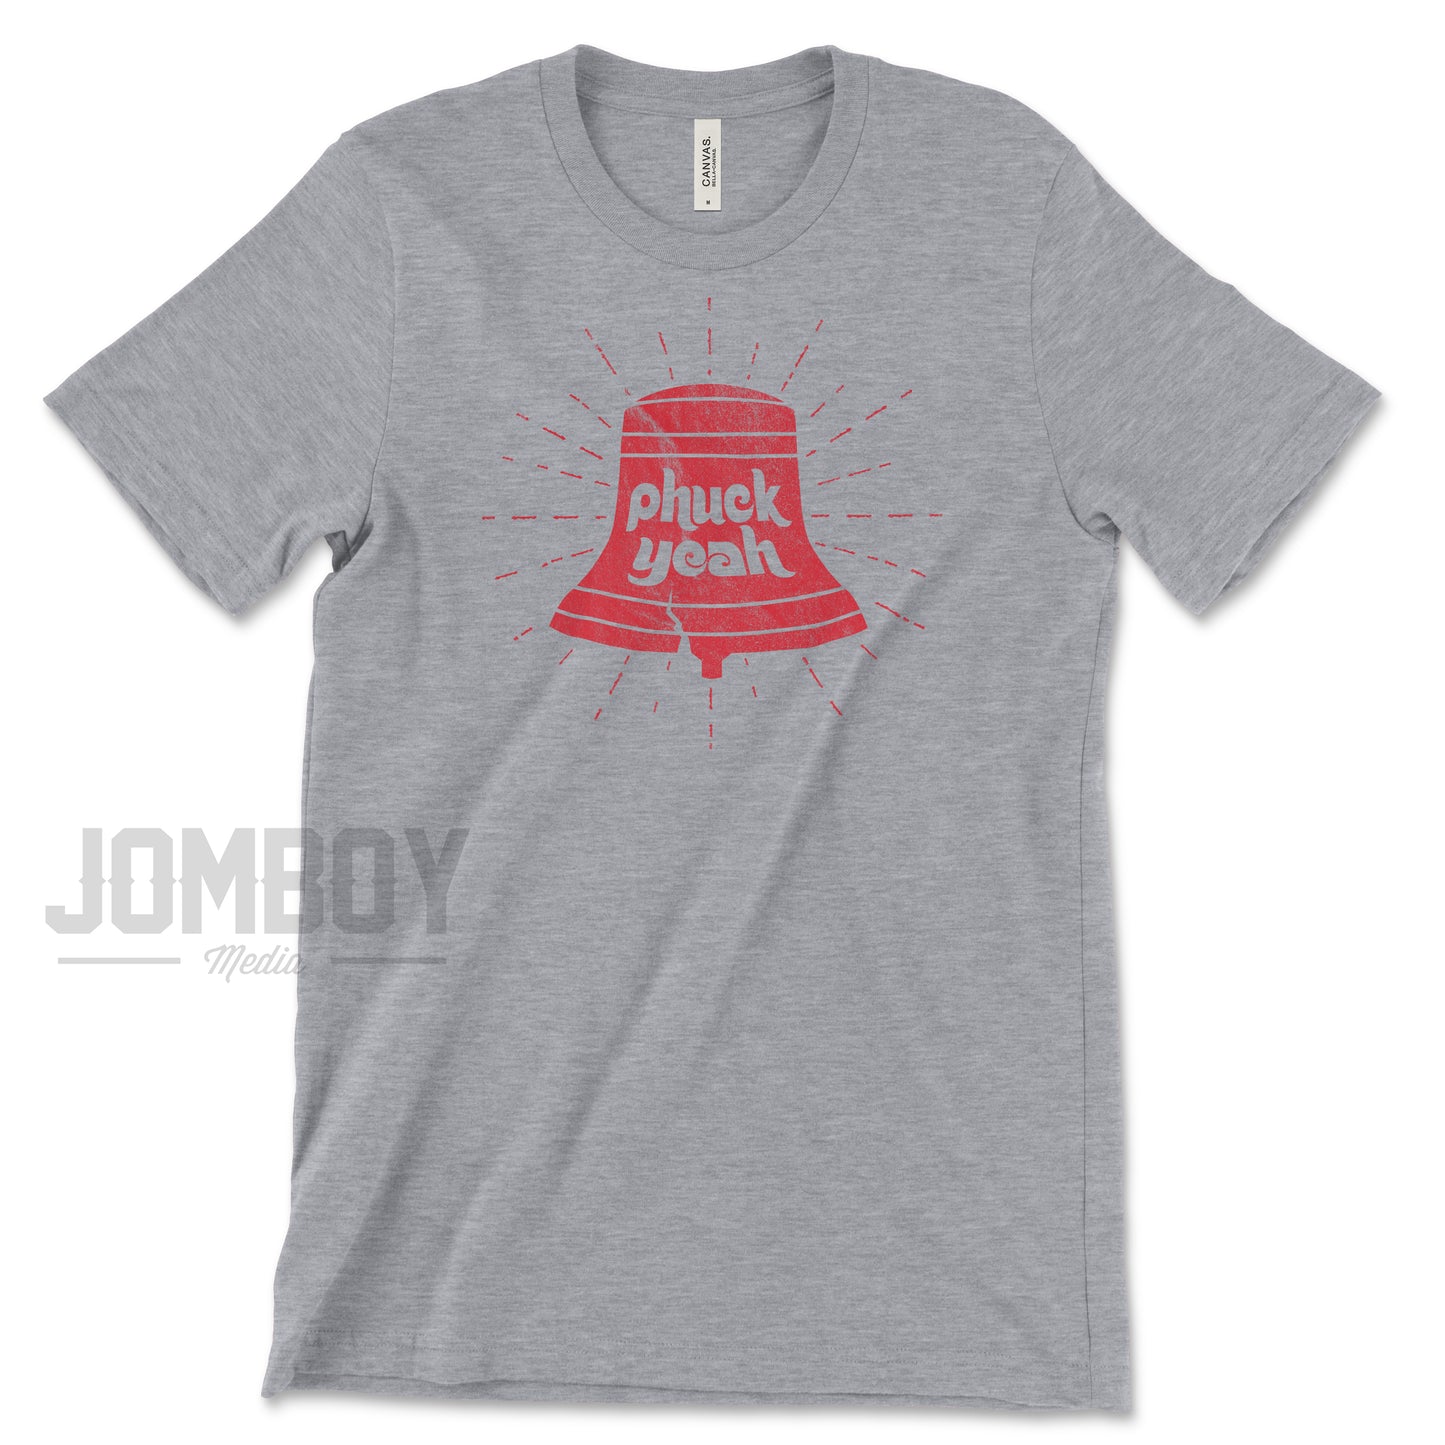 Phuck Yeah | T-Shirt